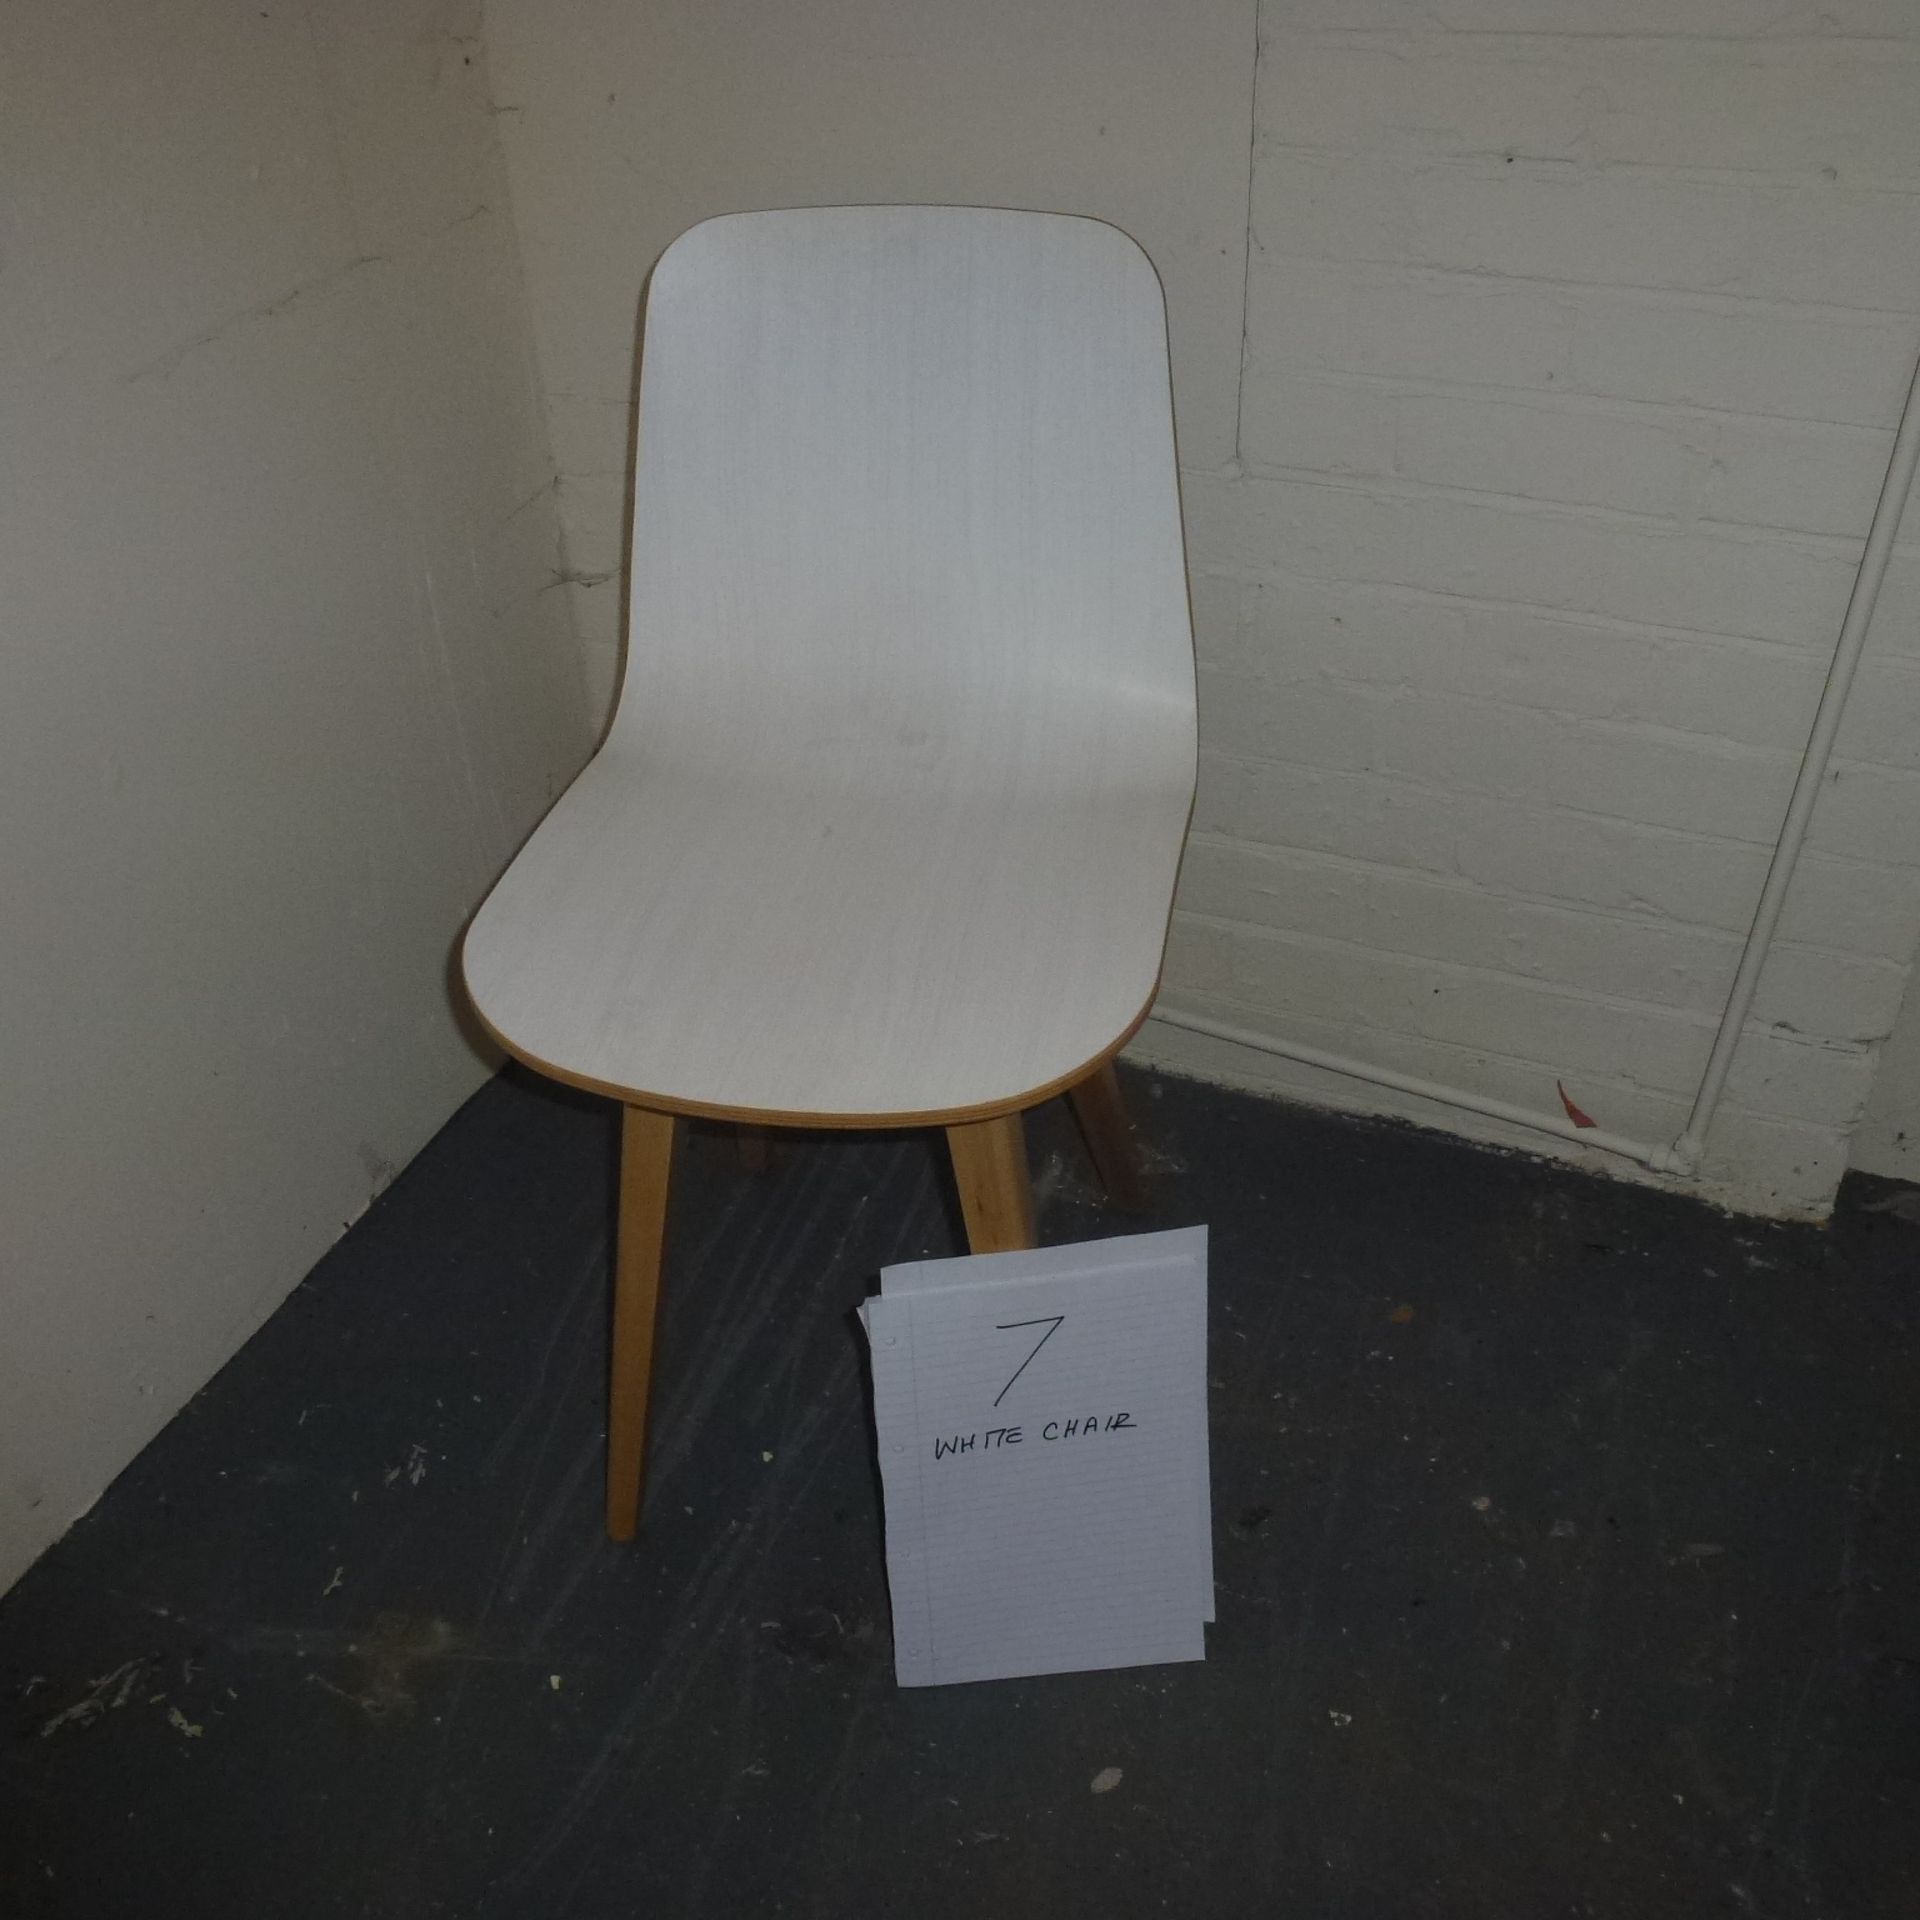 1 x White Chair H x 800 W x 430 D x 500 - Image 3 of 3